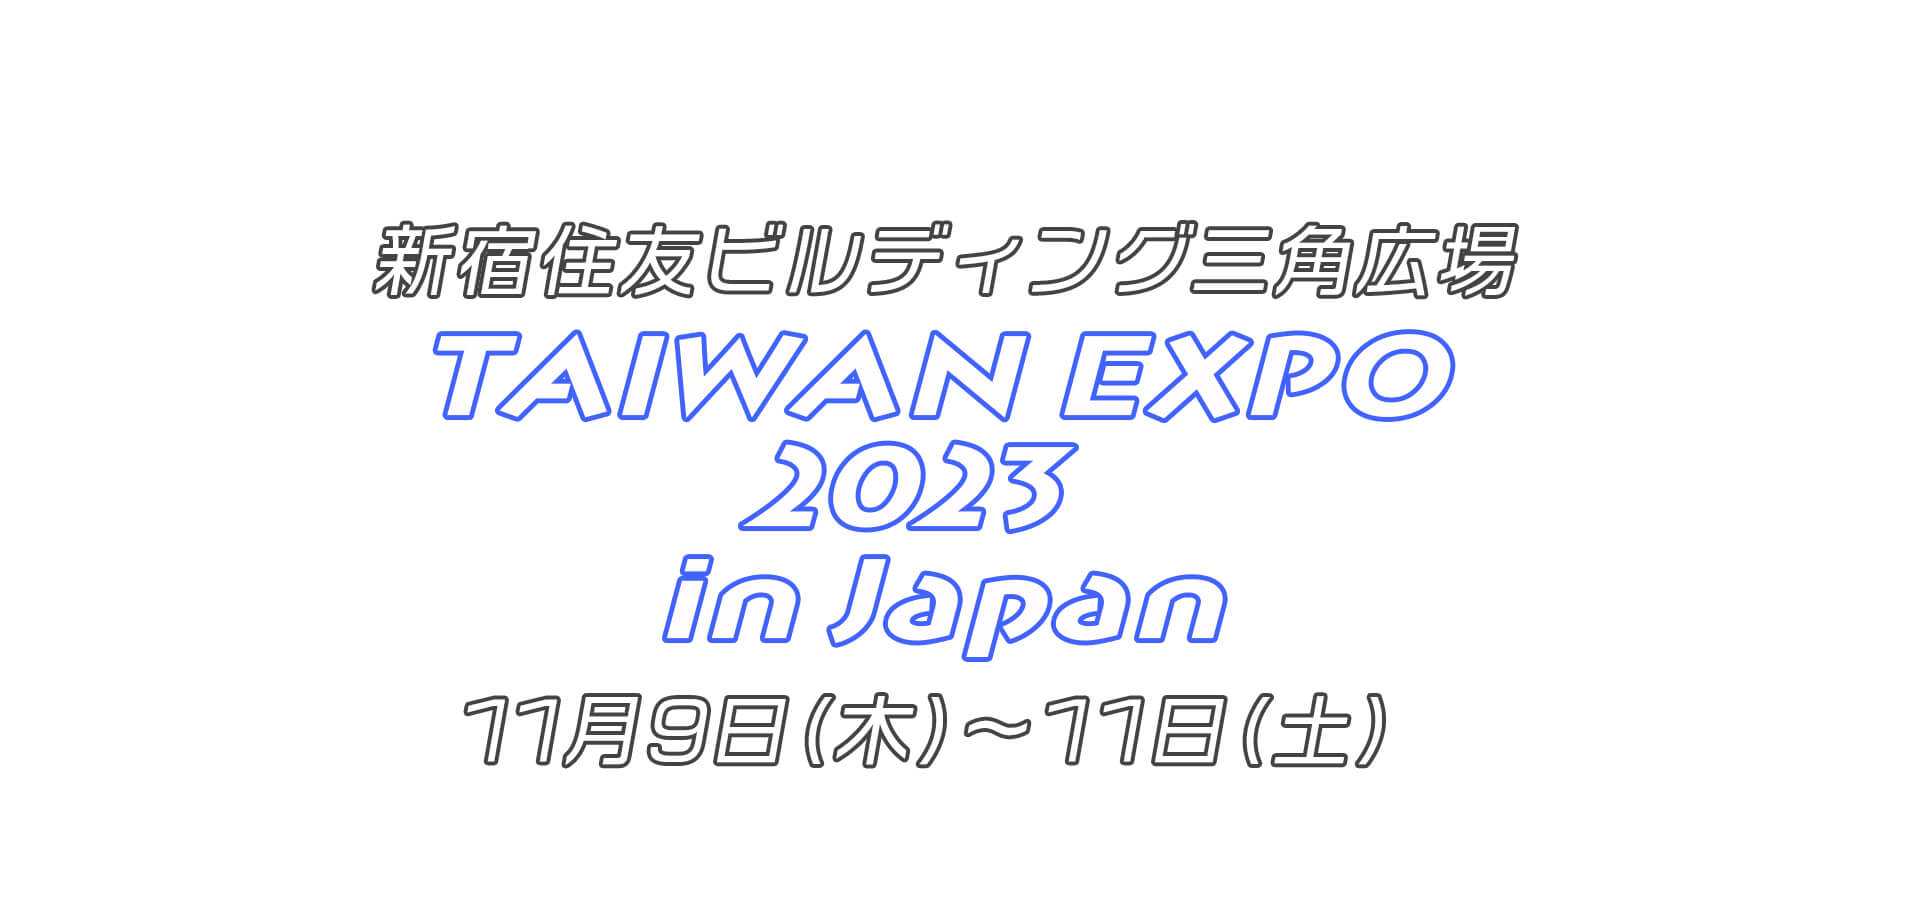 TAIWAN EXPO 2023 in Japan バナー